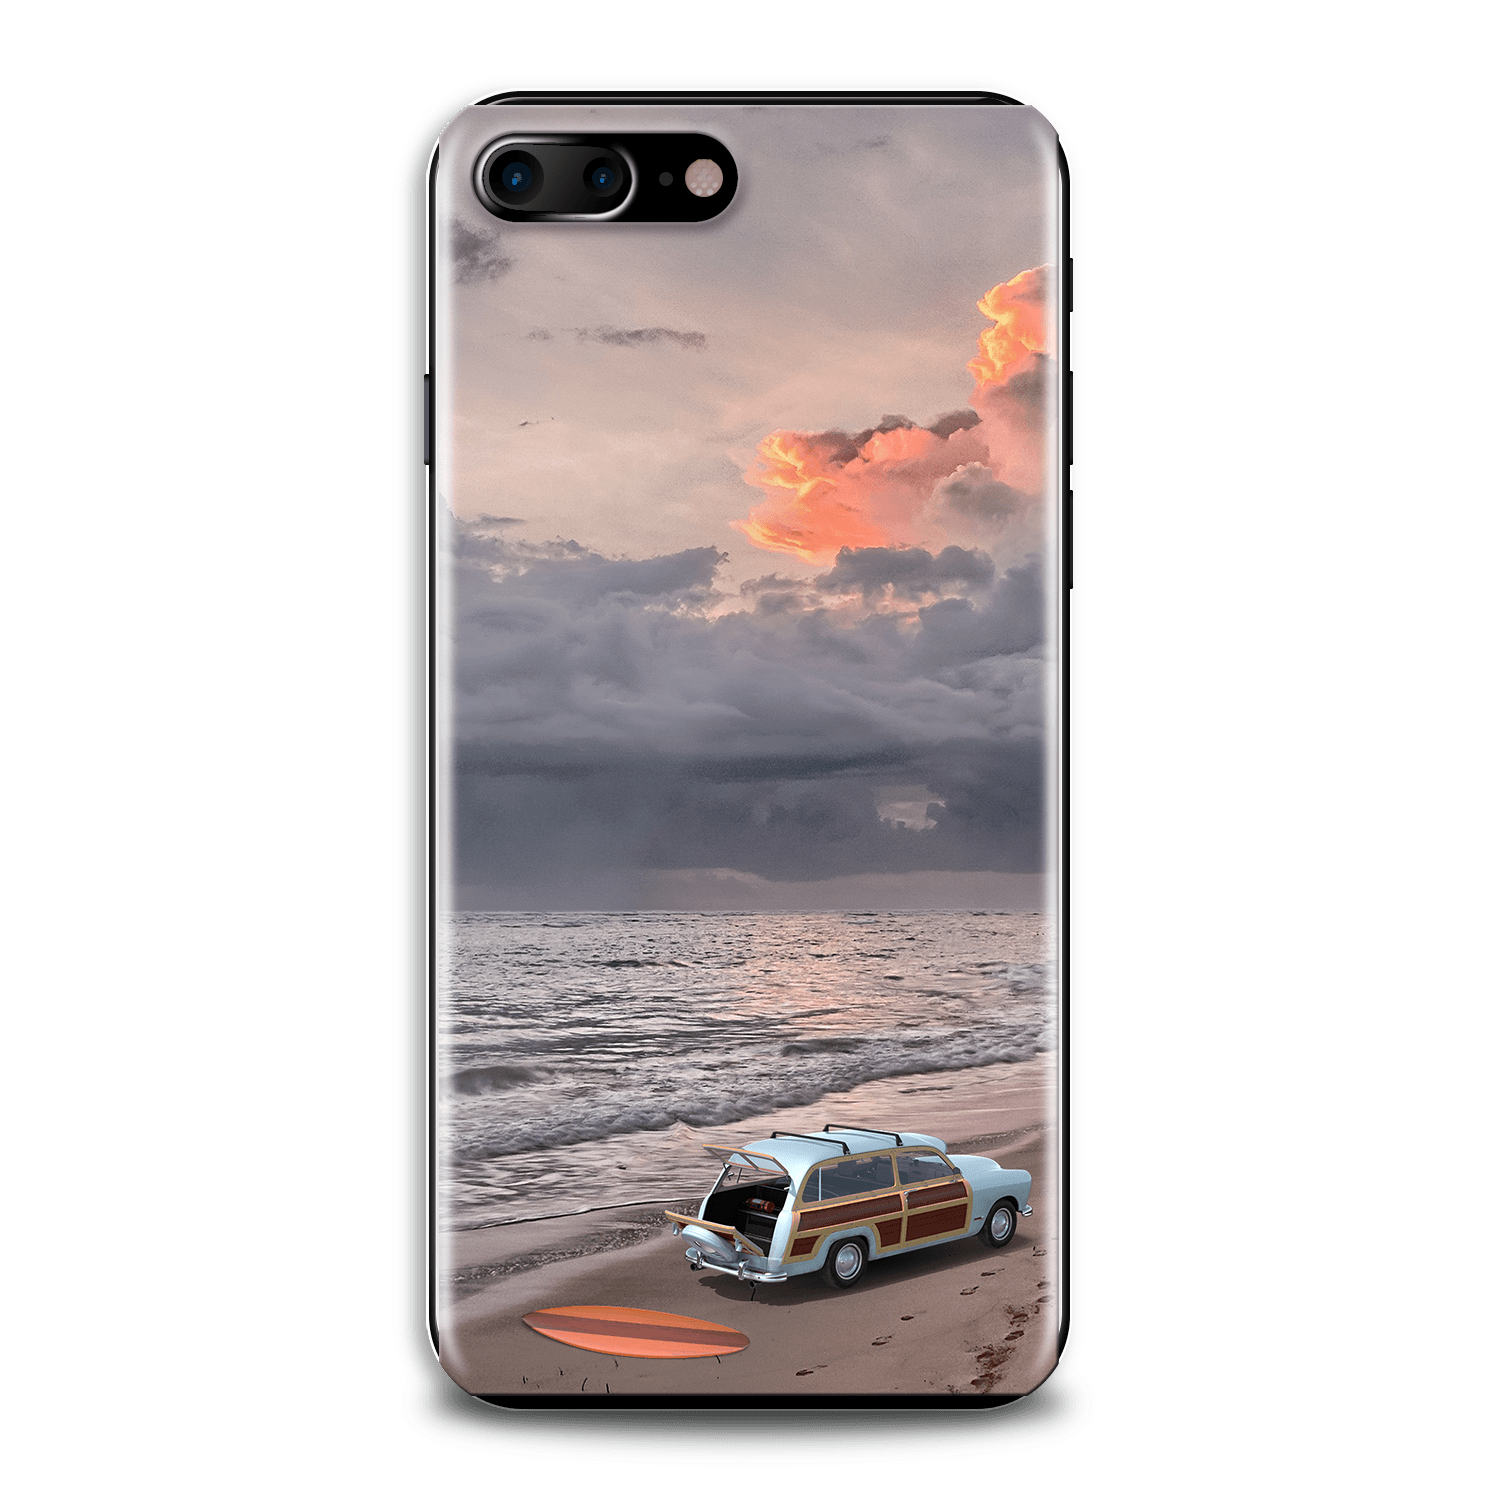 Surfboard Beach Scene Mobile Phone Case Cover